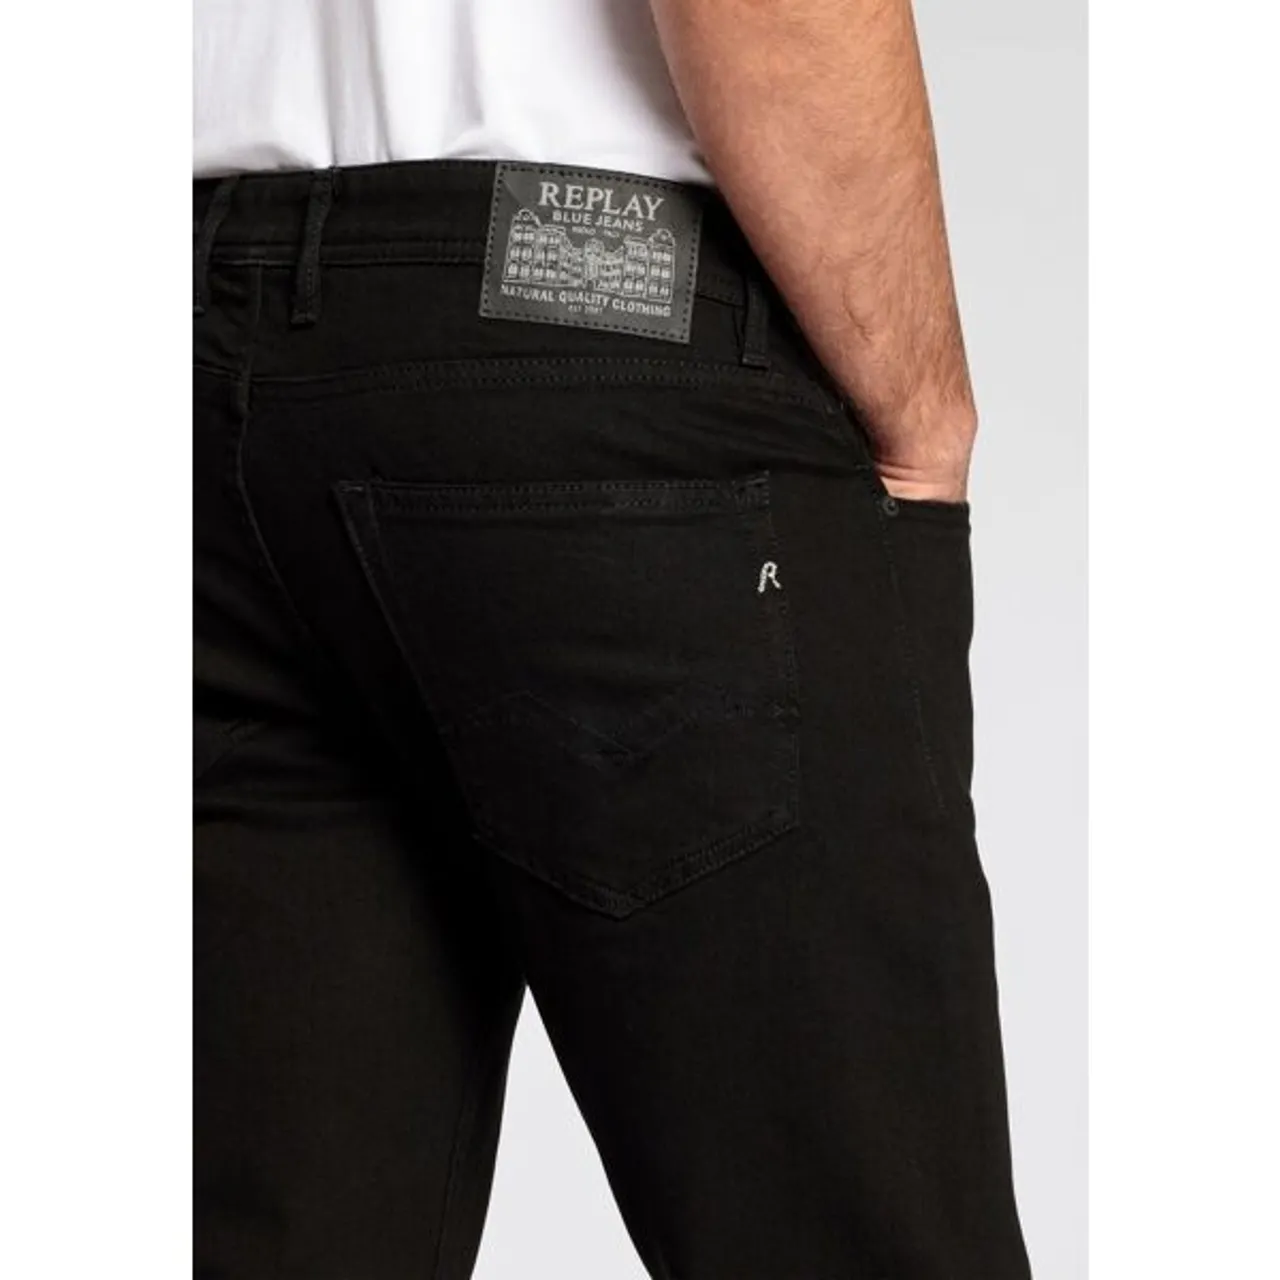 Straight-Jeans REPLAY "GROVER" Gr. 33, Länge 34, schwarz (black black) Herren Jeans Straight Fit